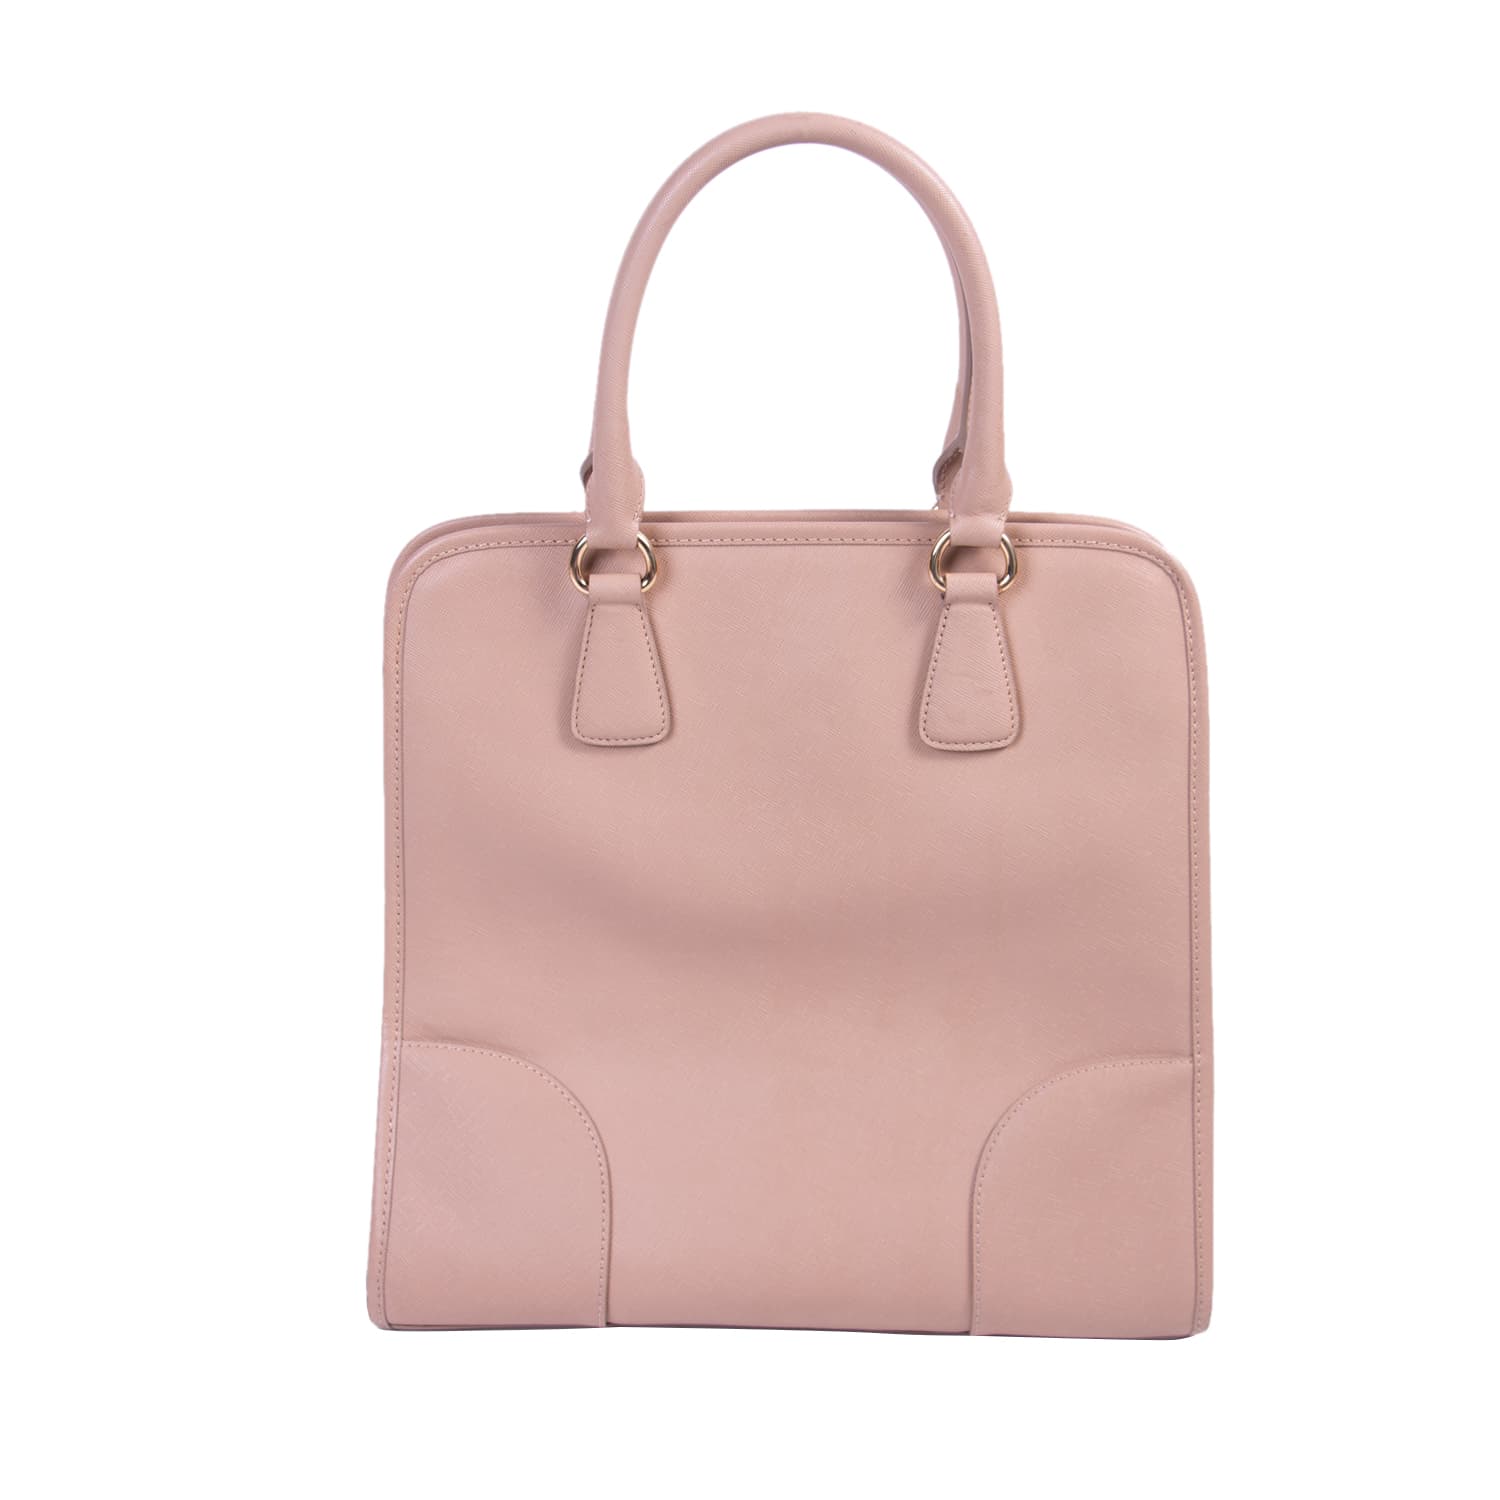 Prada Light Pink Saffiano lux Leather Satchel Handbag